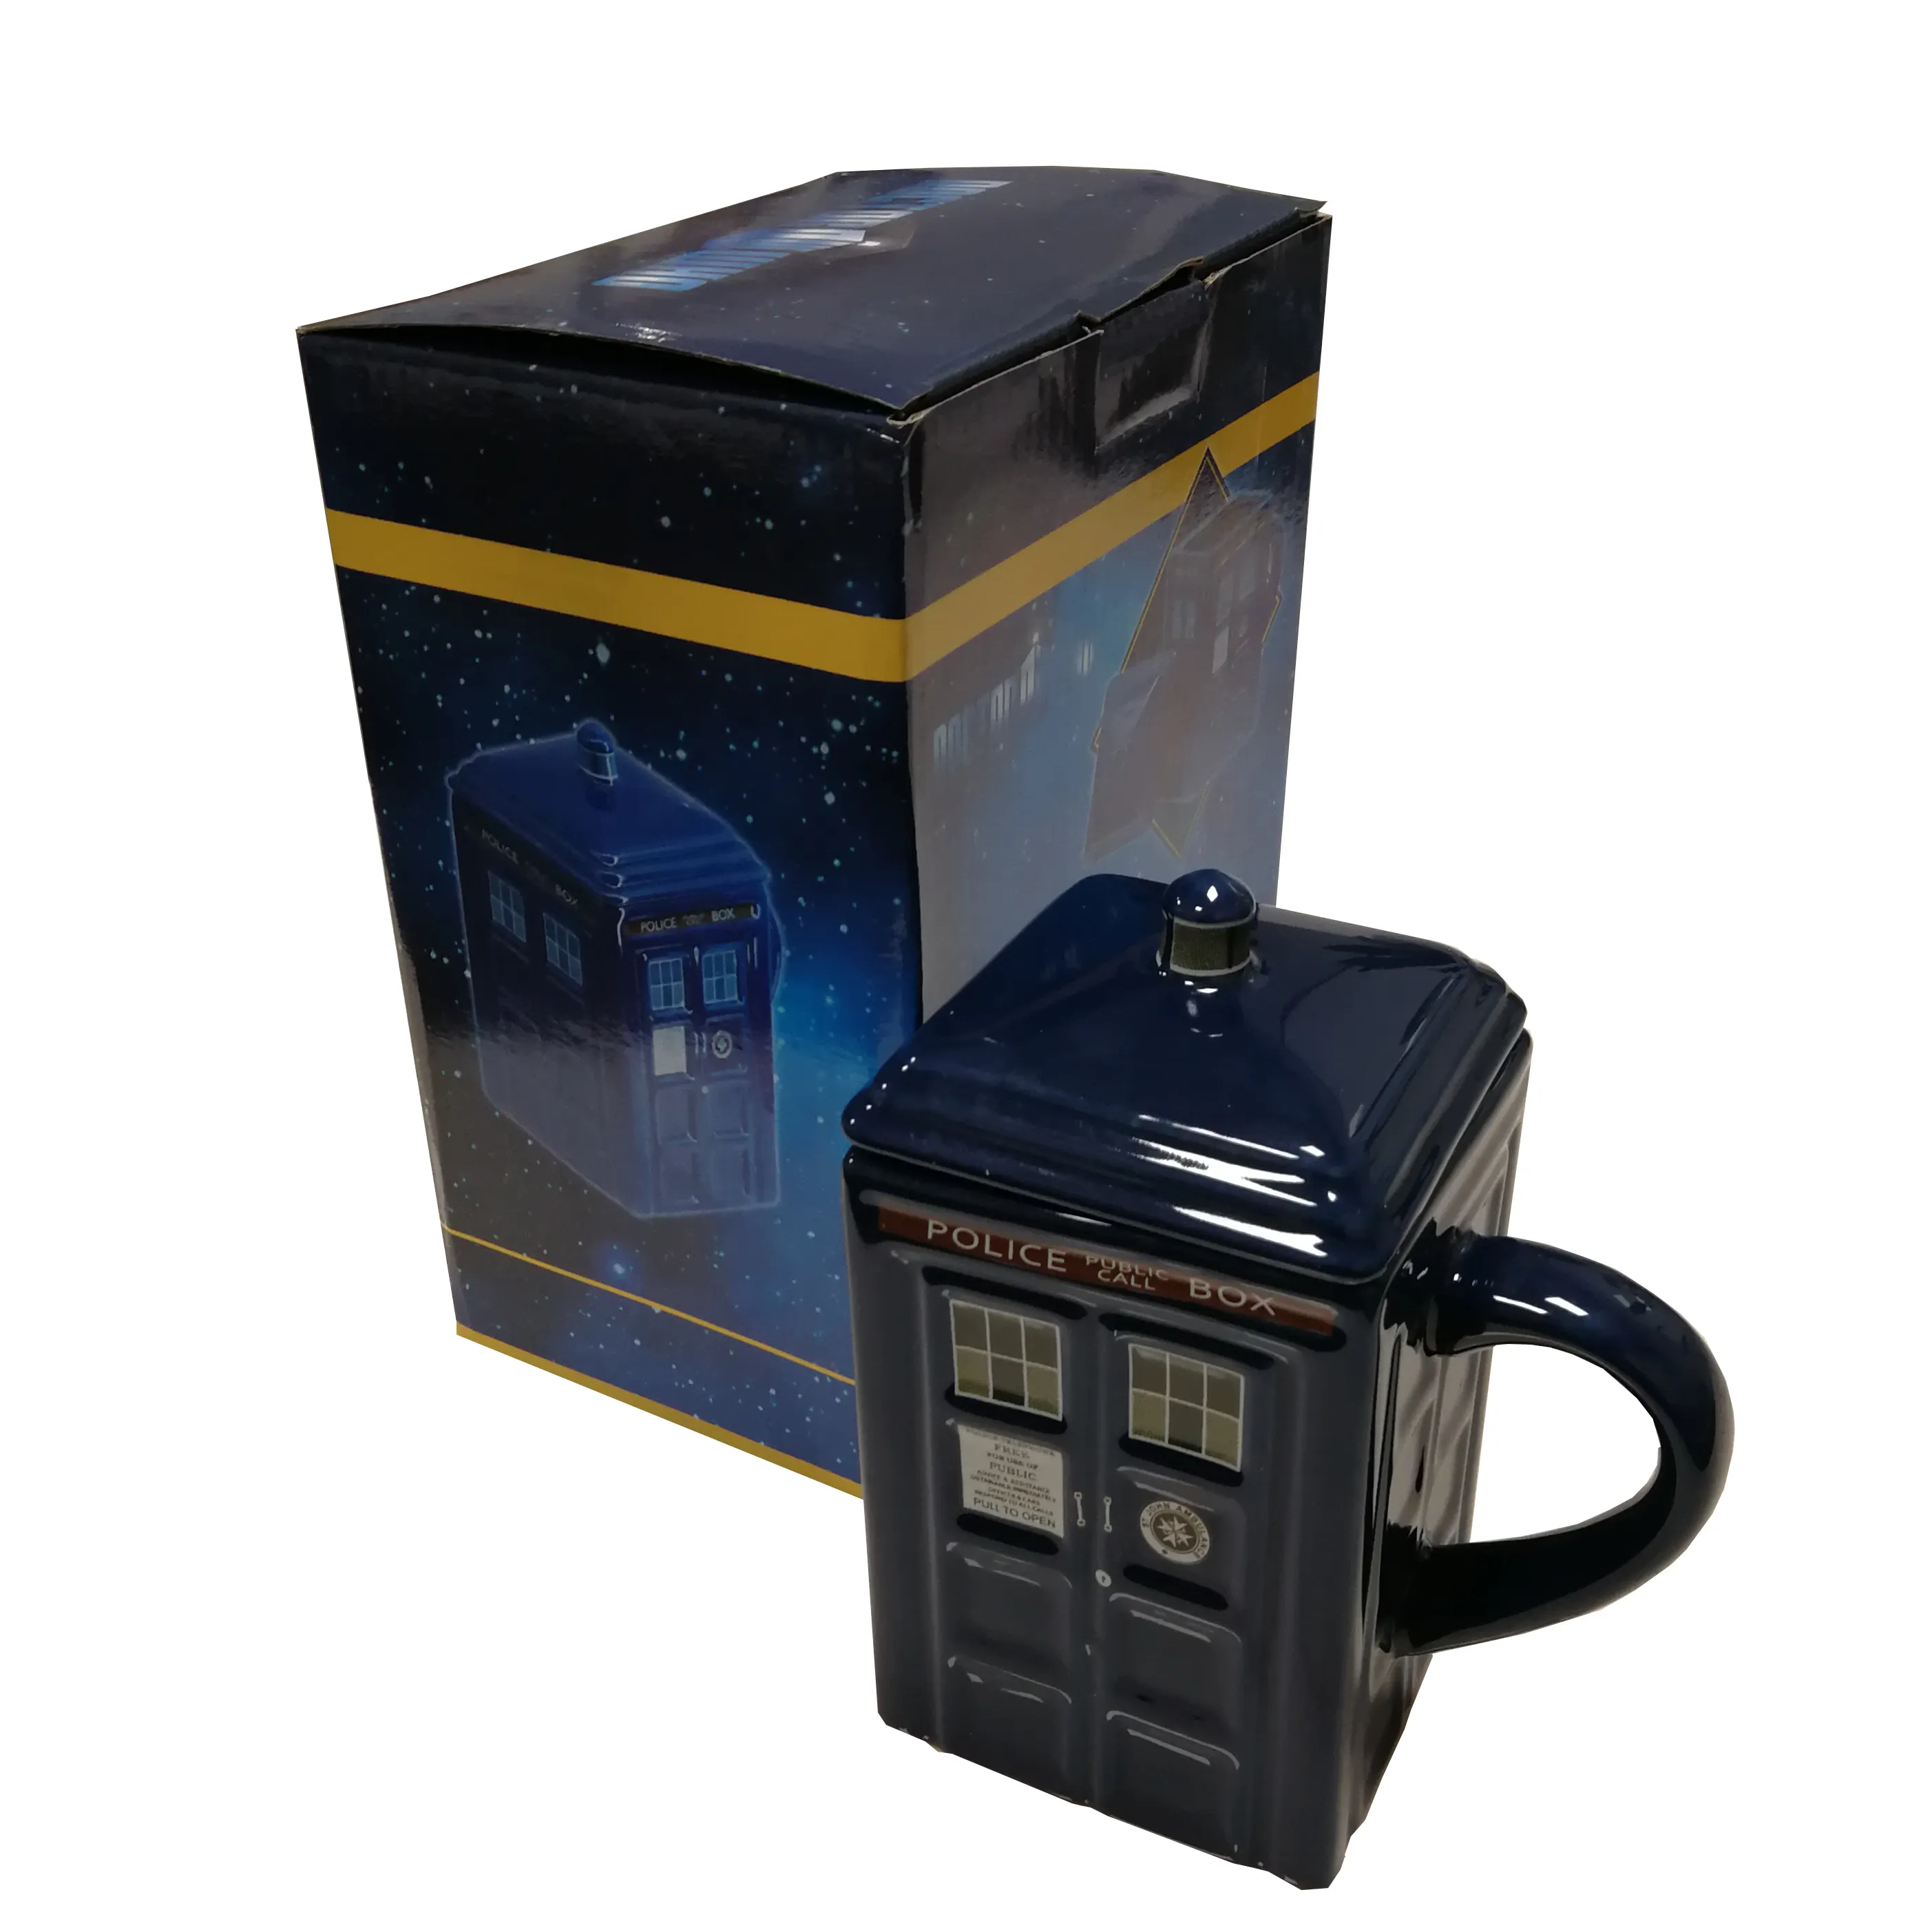 2020 New custom color printed mug box with sponge insets for 11oz coffee mug packaging